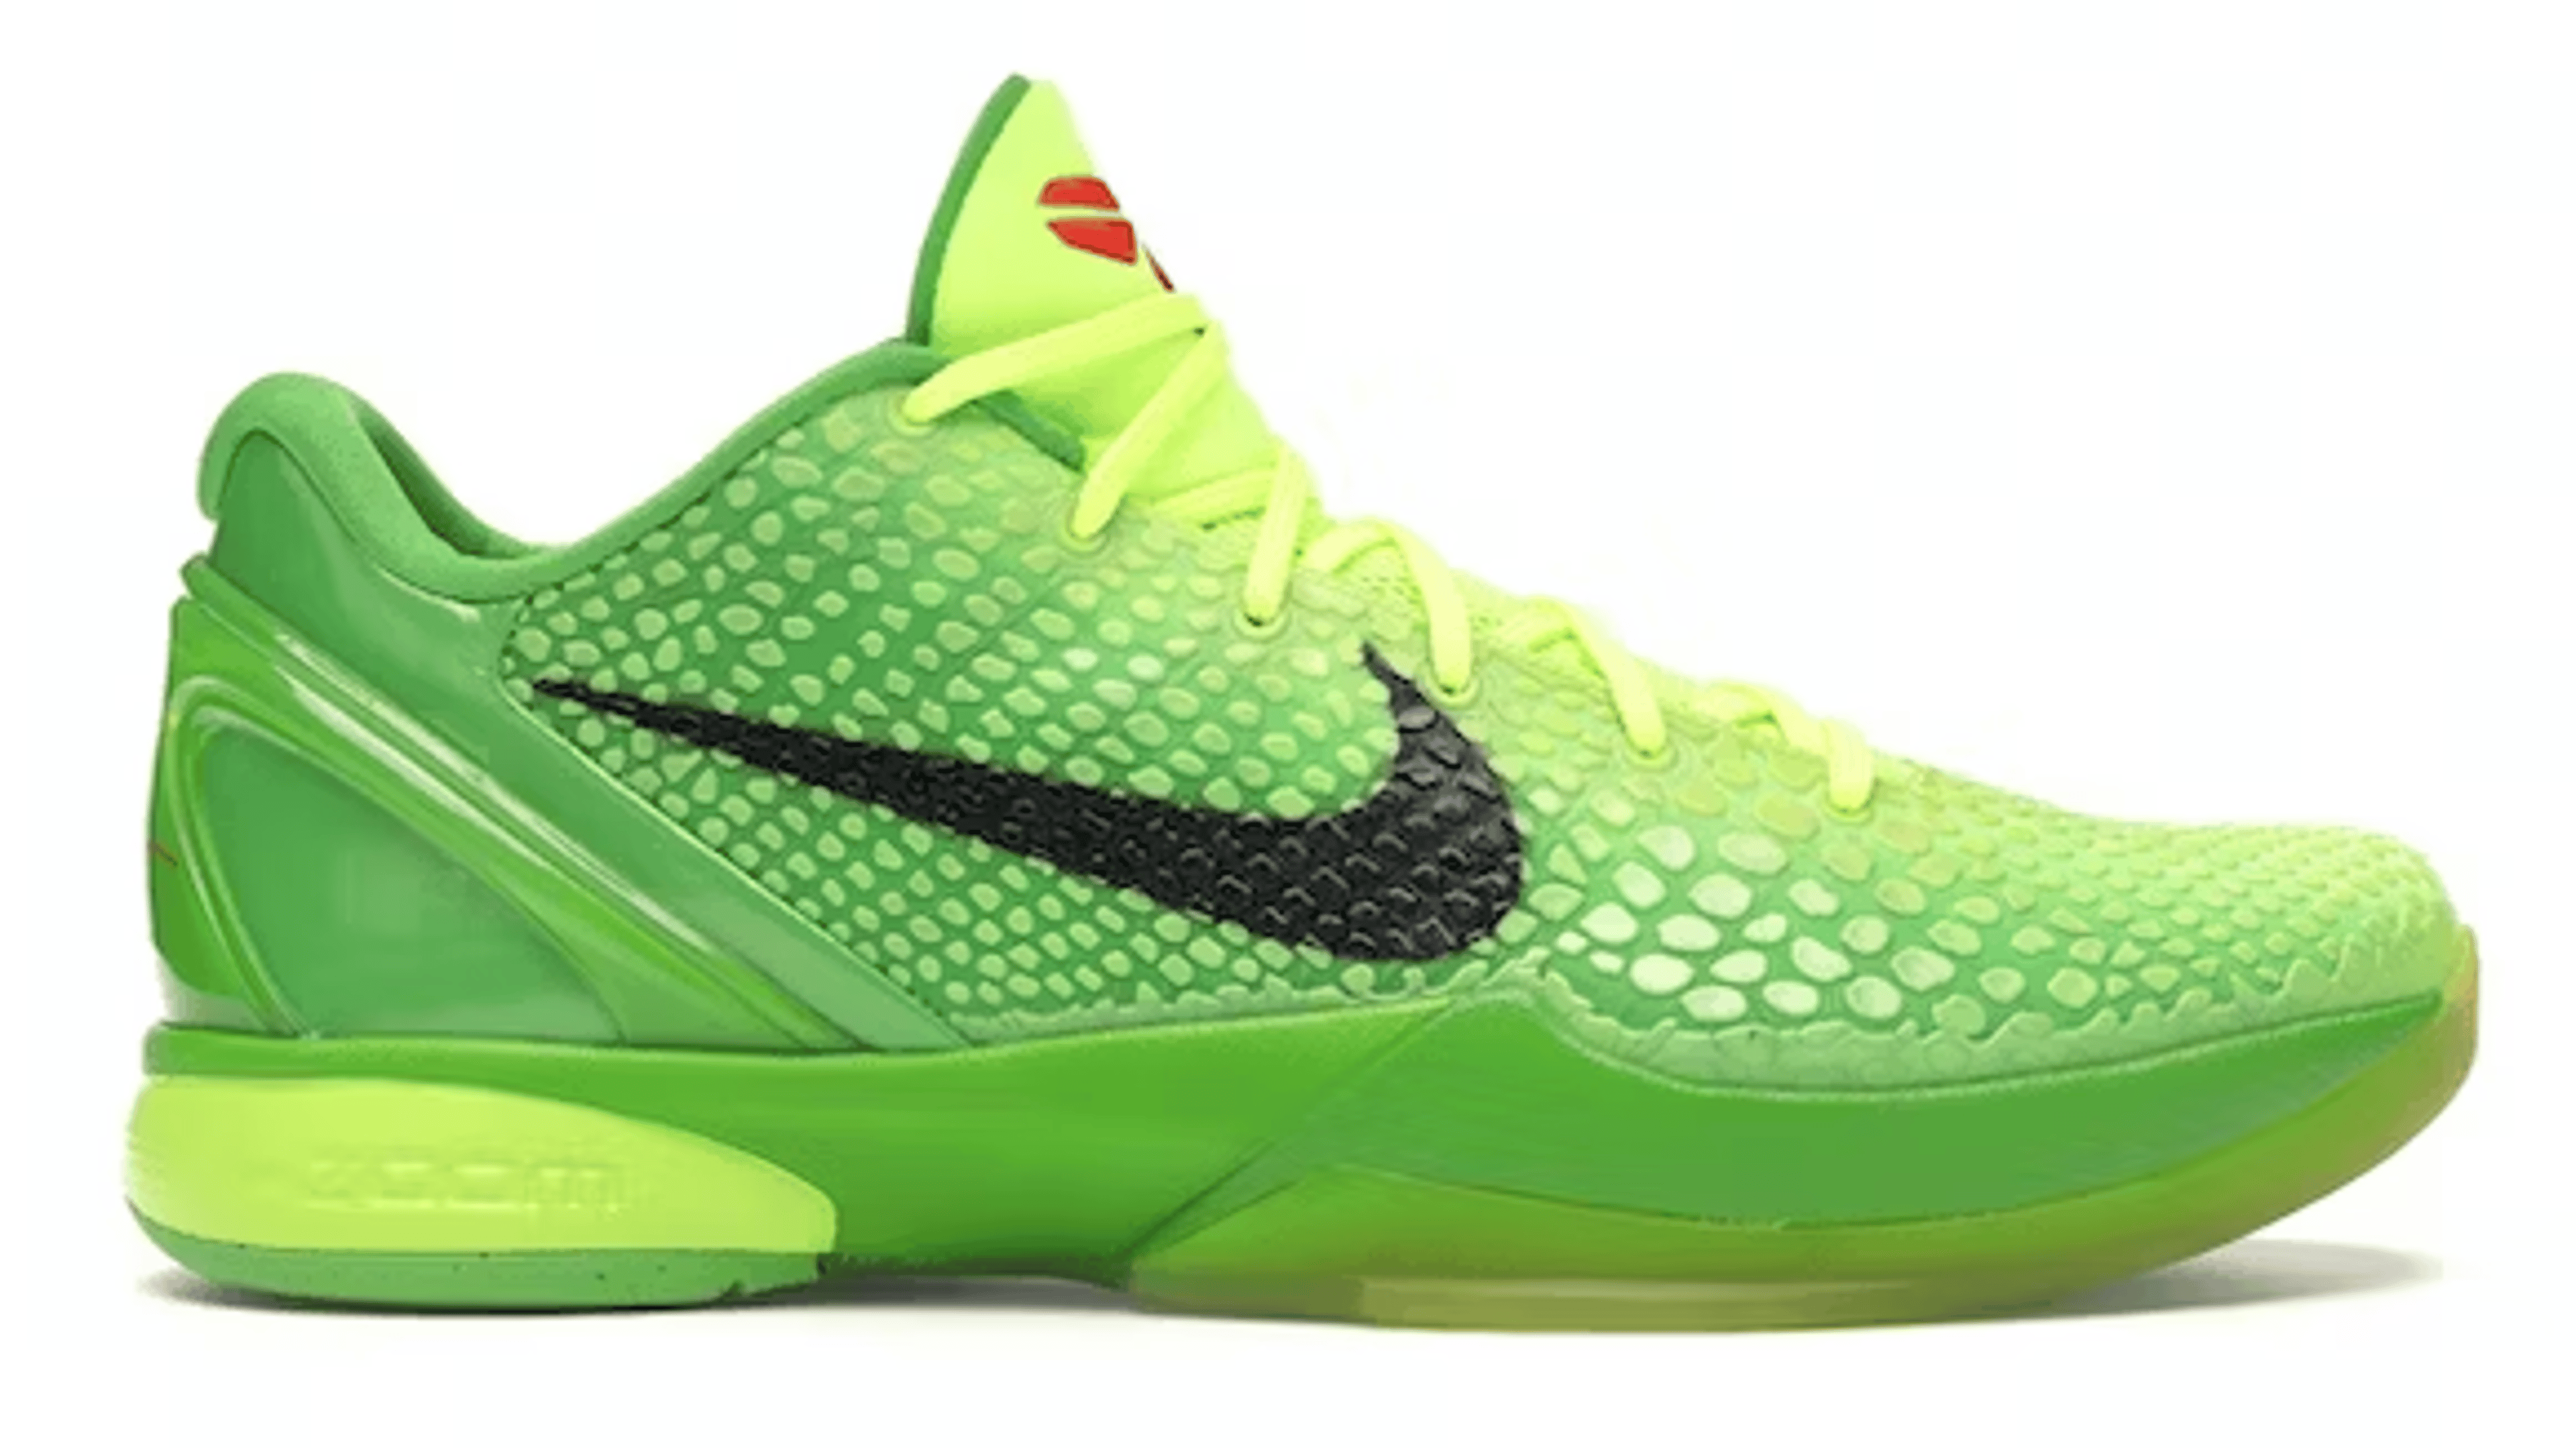 Nike Kobe 6 Grinch (2010)